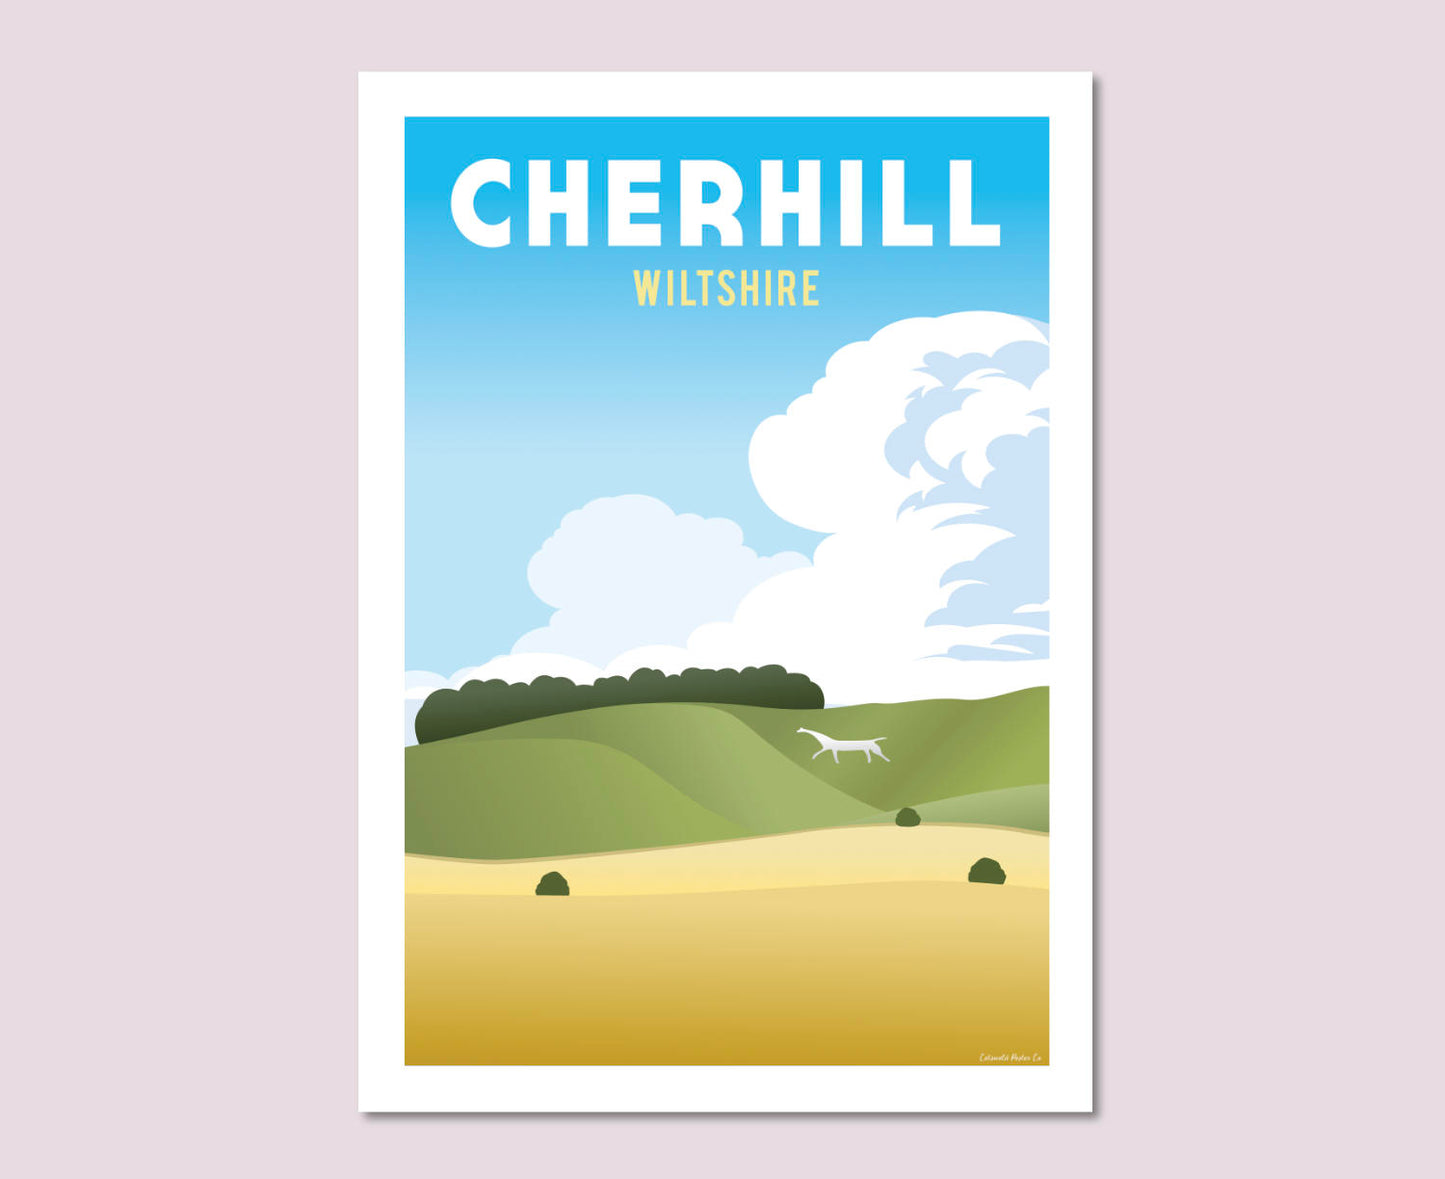 Cherhill White Horse Poster Design